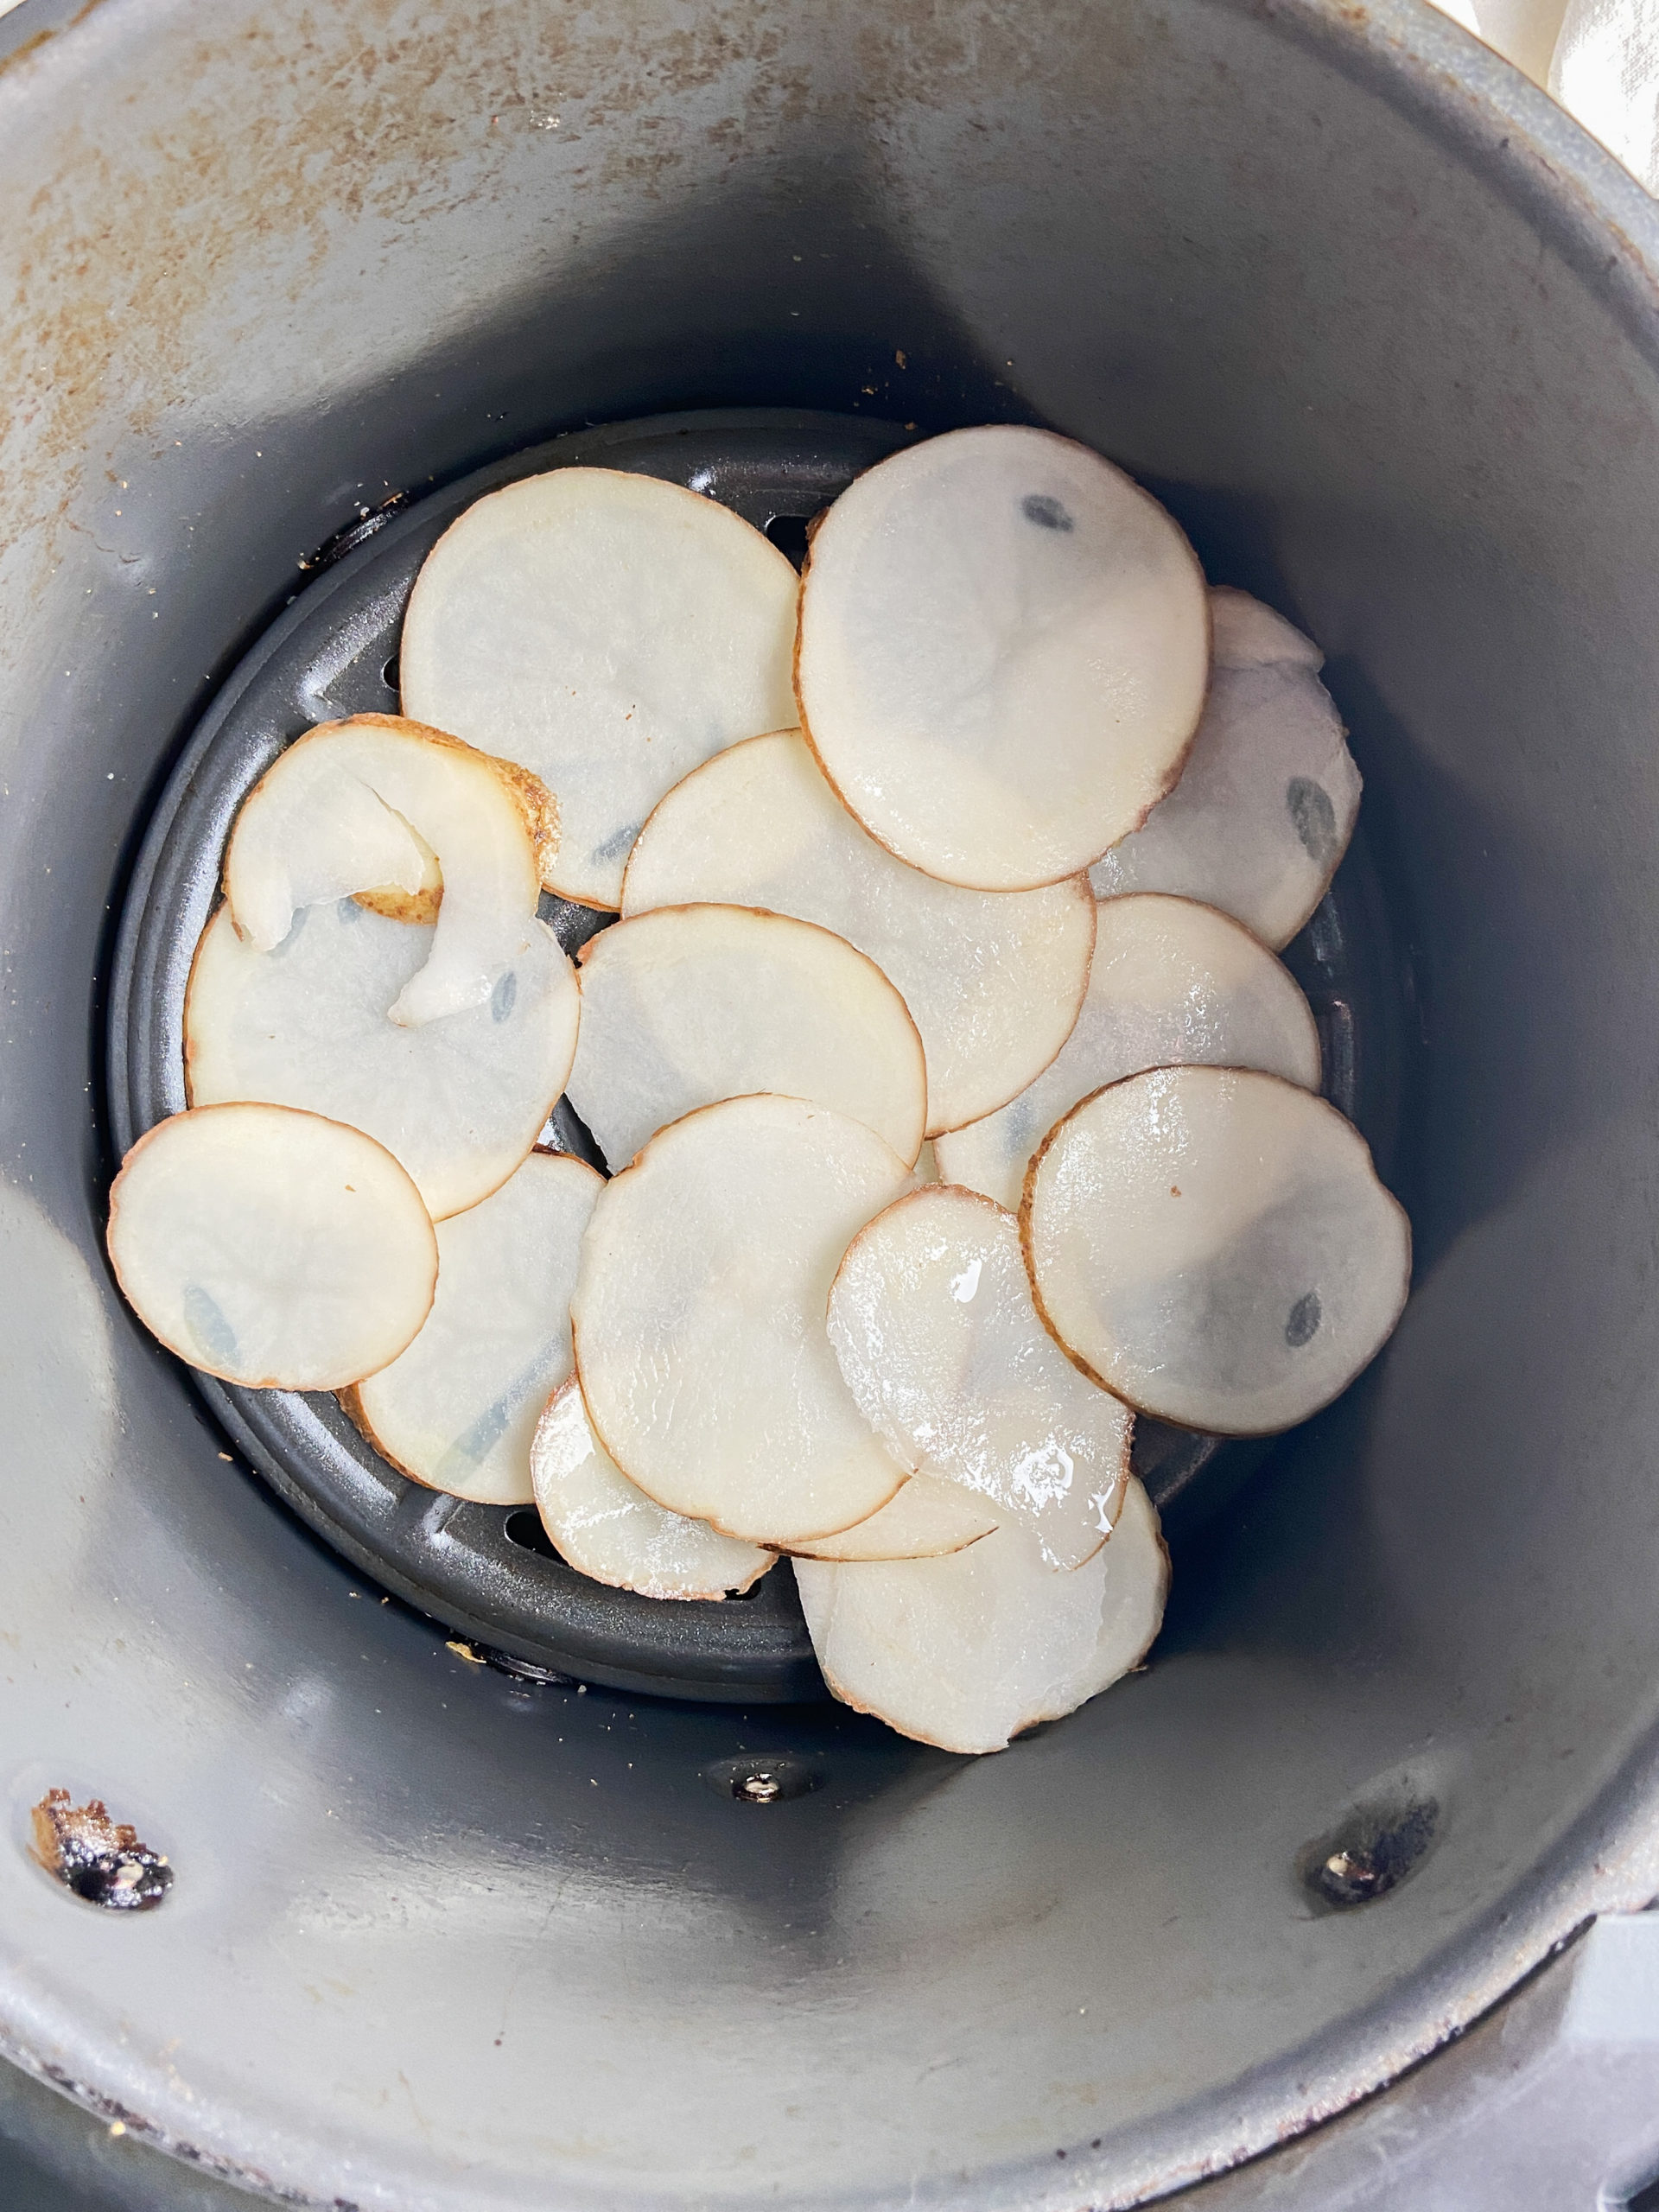 Potato slices in air fryer basket. 